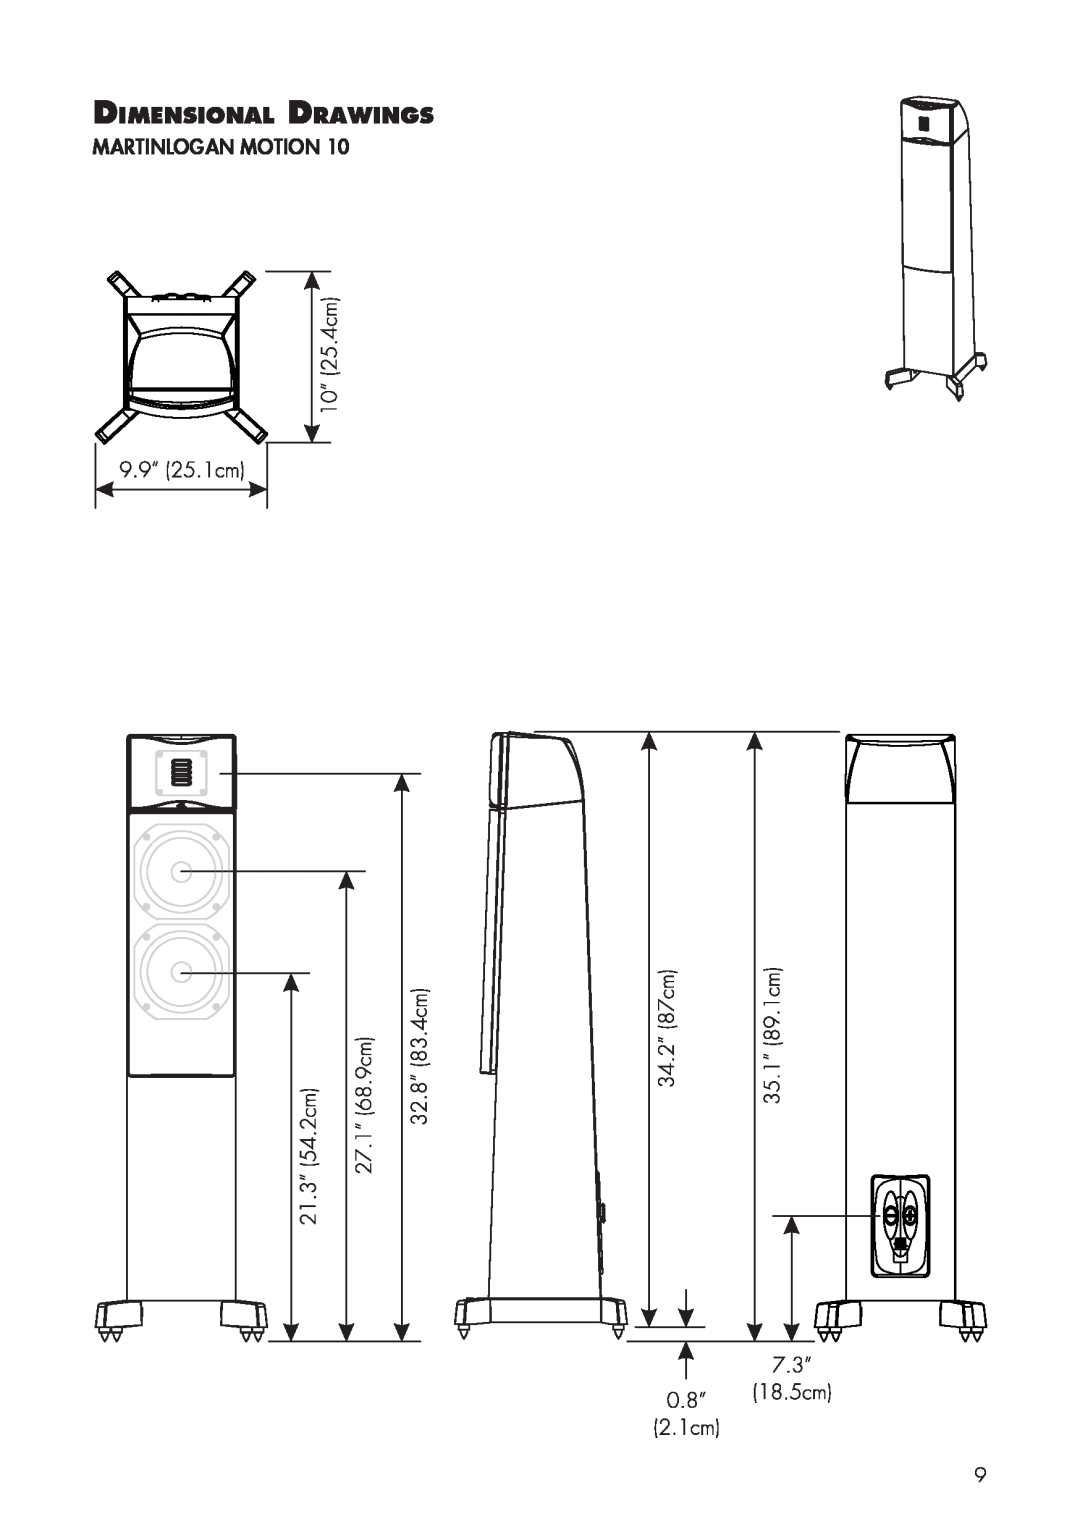 MartinLogan 10, 12 user manual Dimensional Drawings, Martinlogan Motion 